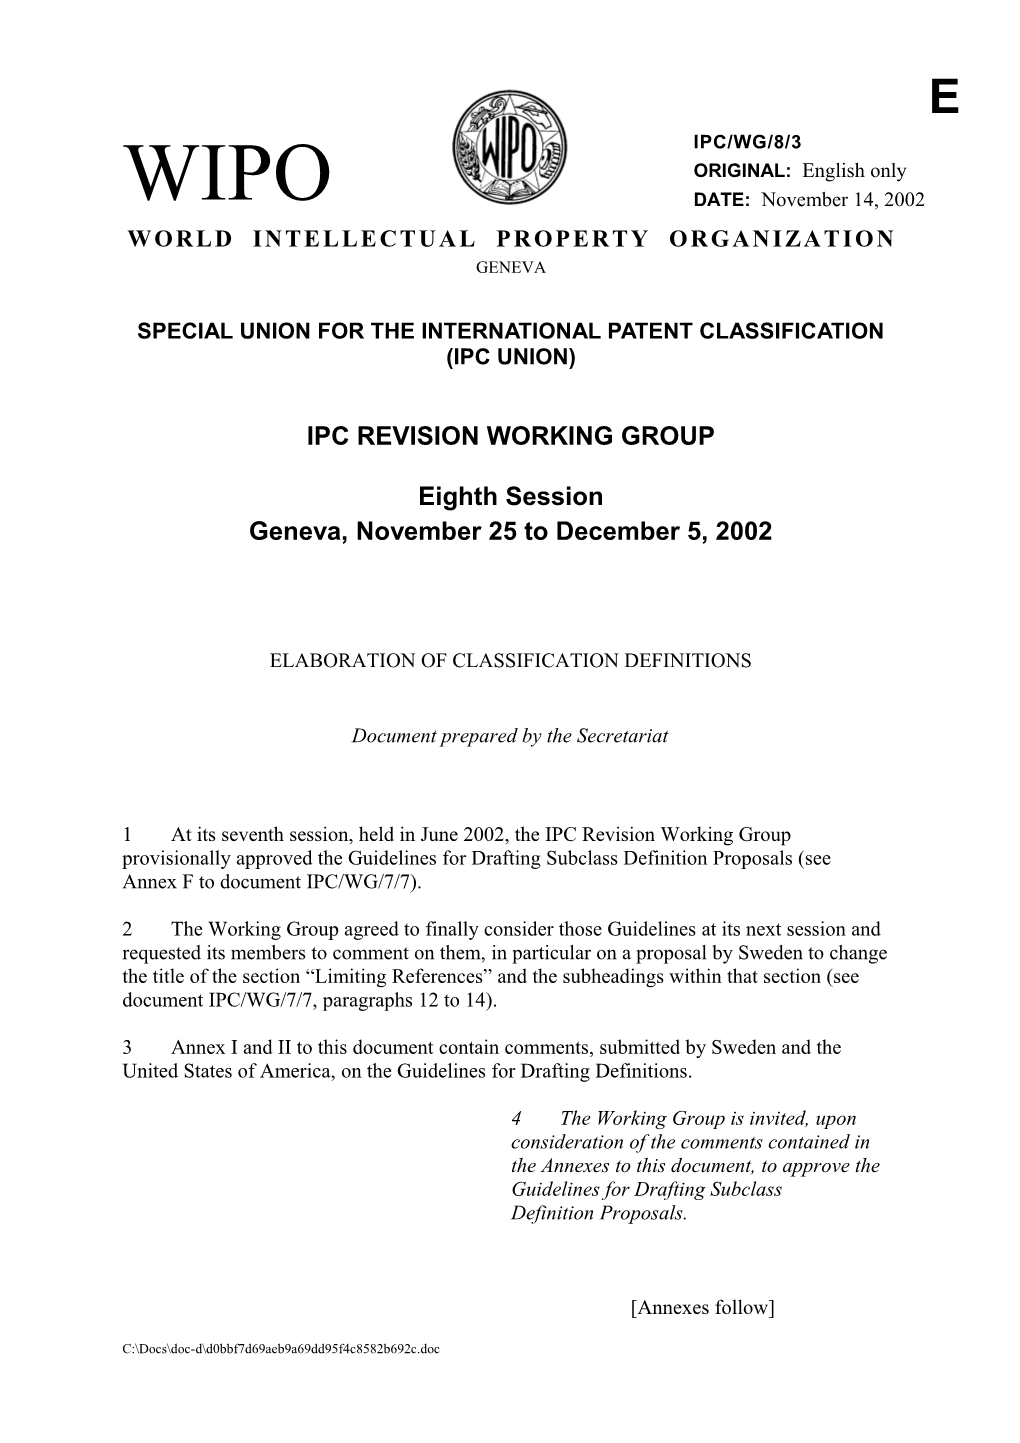 IPC/WG/8/3: Elaboration of Classification Definitions